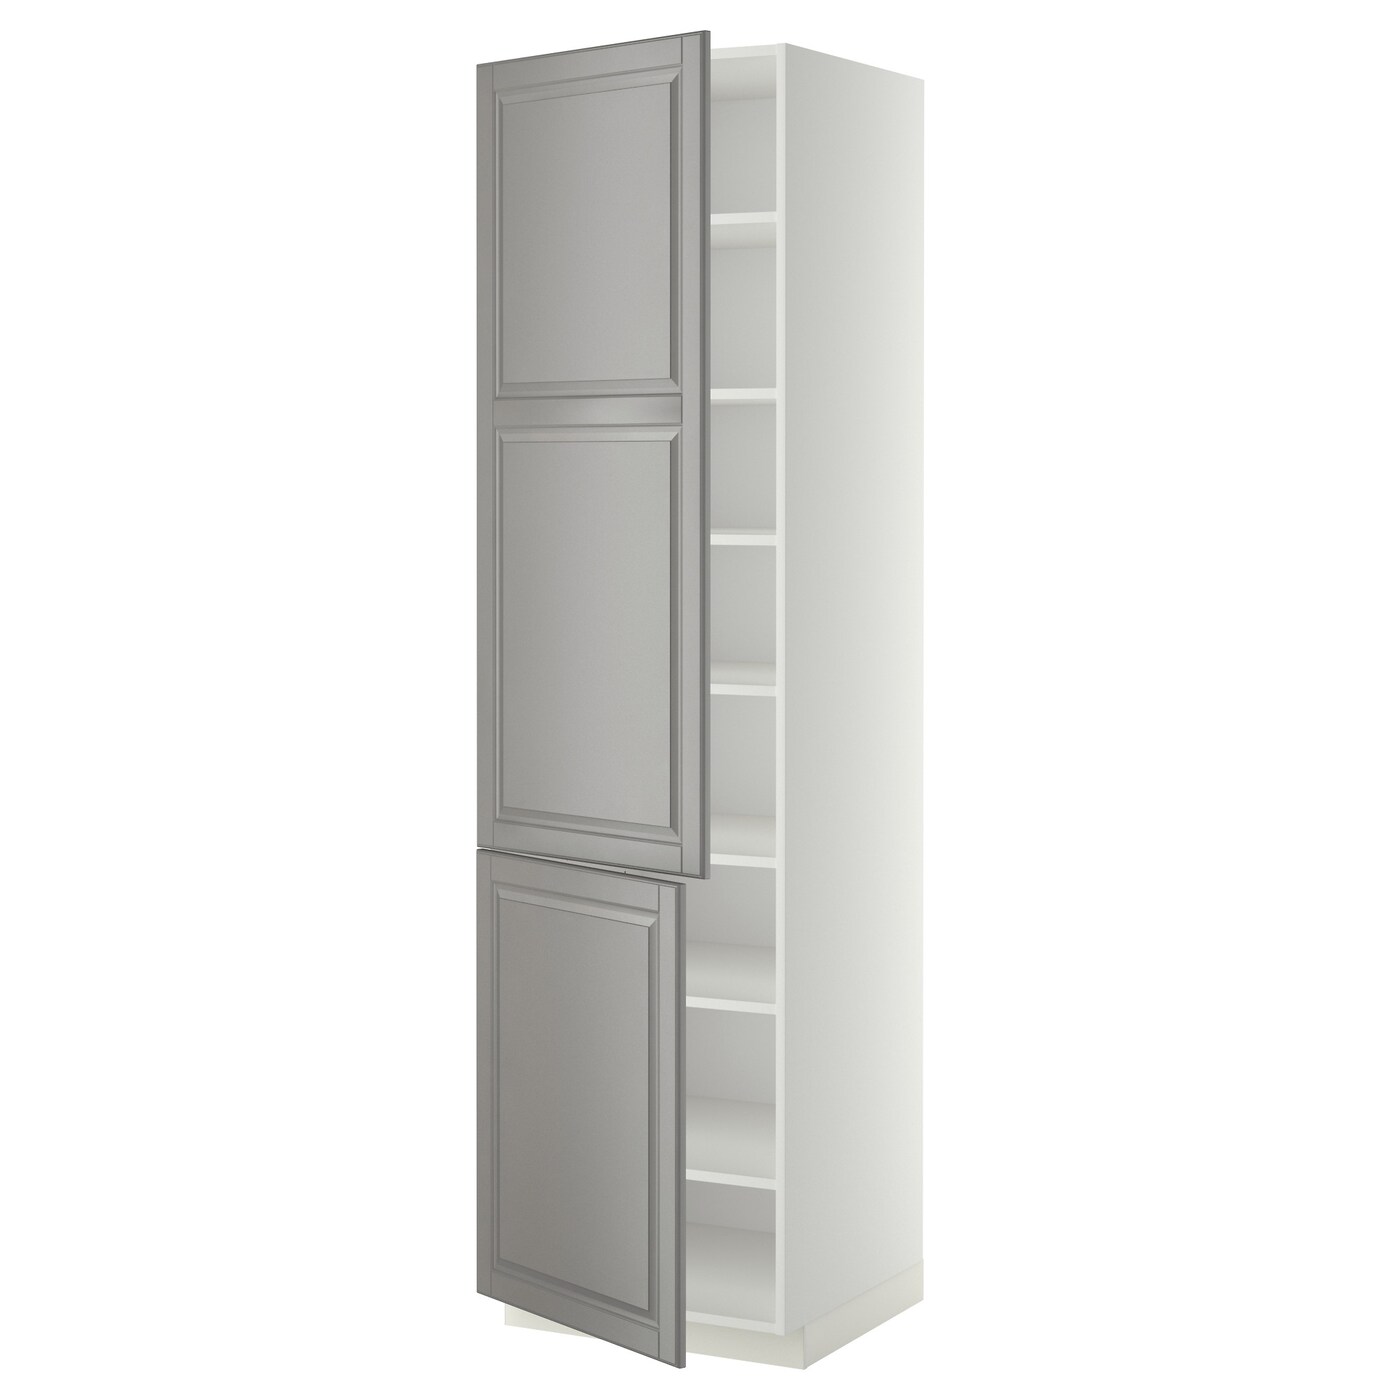 Высокий кухонный шкаф с полками - IKEA METOD/МЕТОД ИКЕА, 220х60х60 см, белый/серый